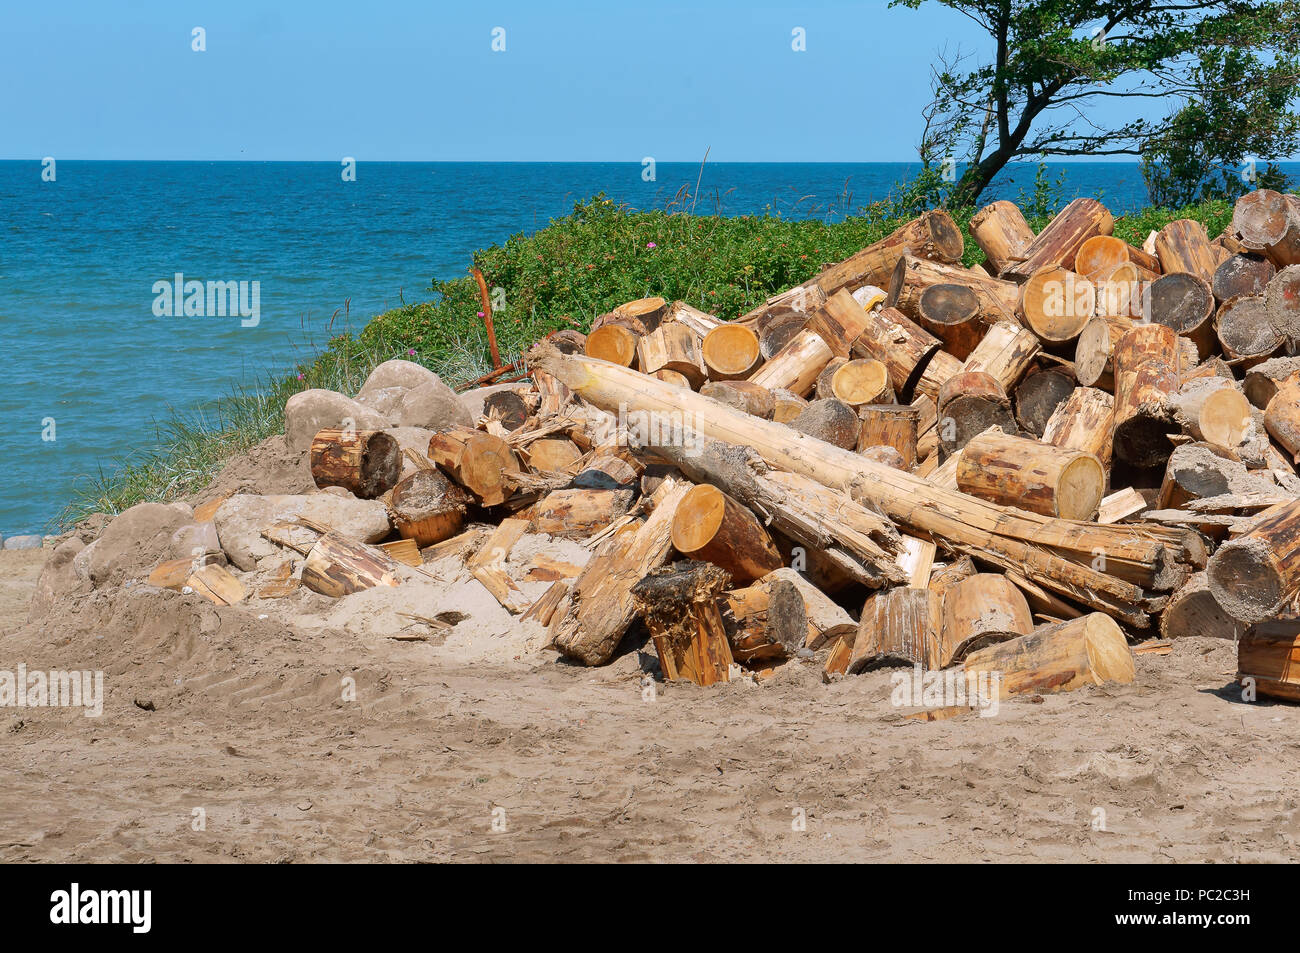 logging on the coast, deforestation, felled trees Stock Photo